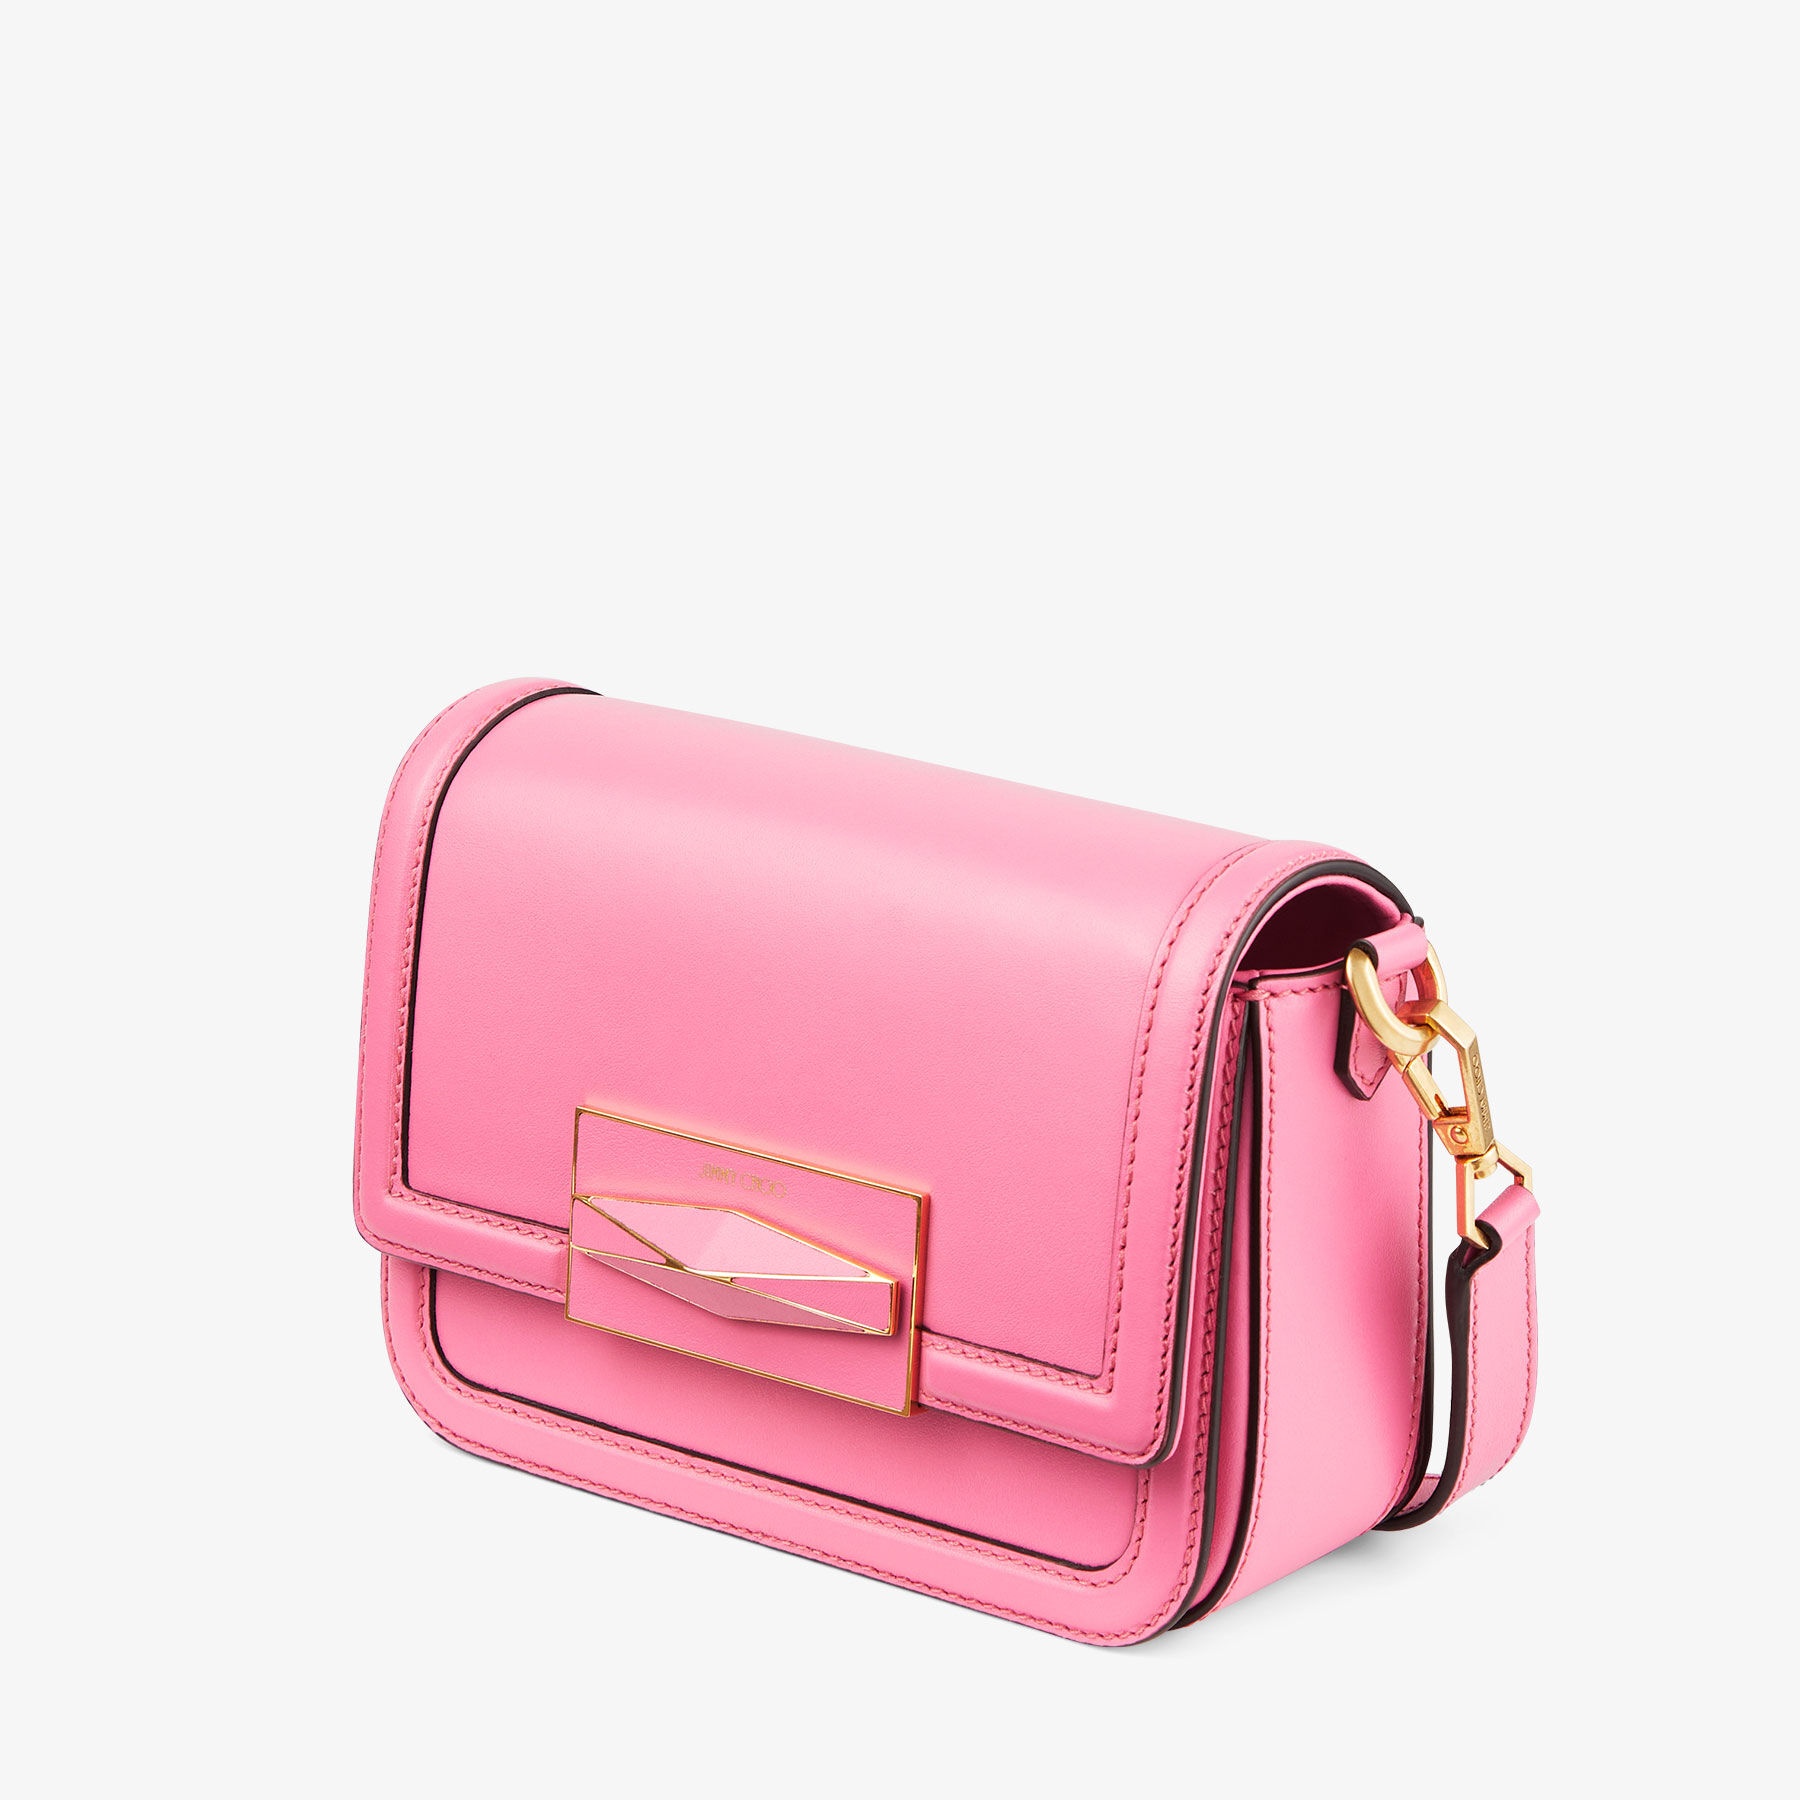 Diamond Crossbody
Candy Pink Smooth Calf Leather Top Handle Bag - 2